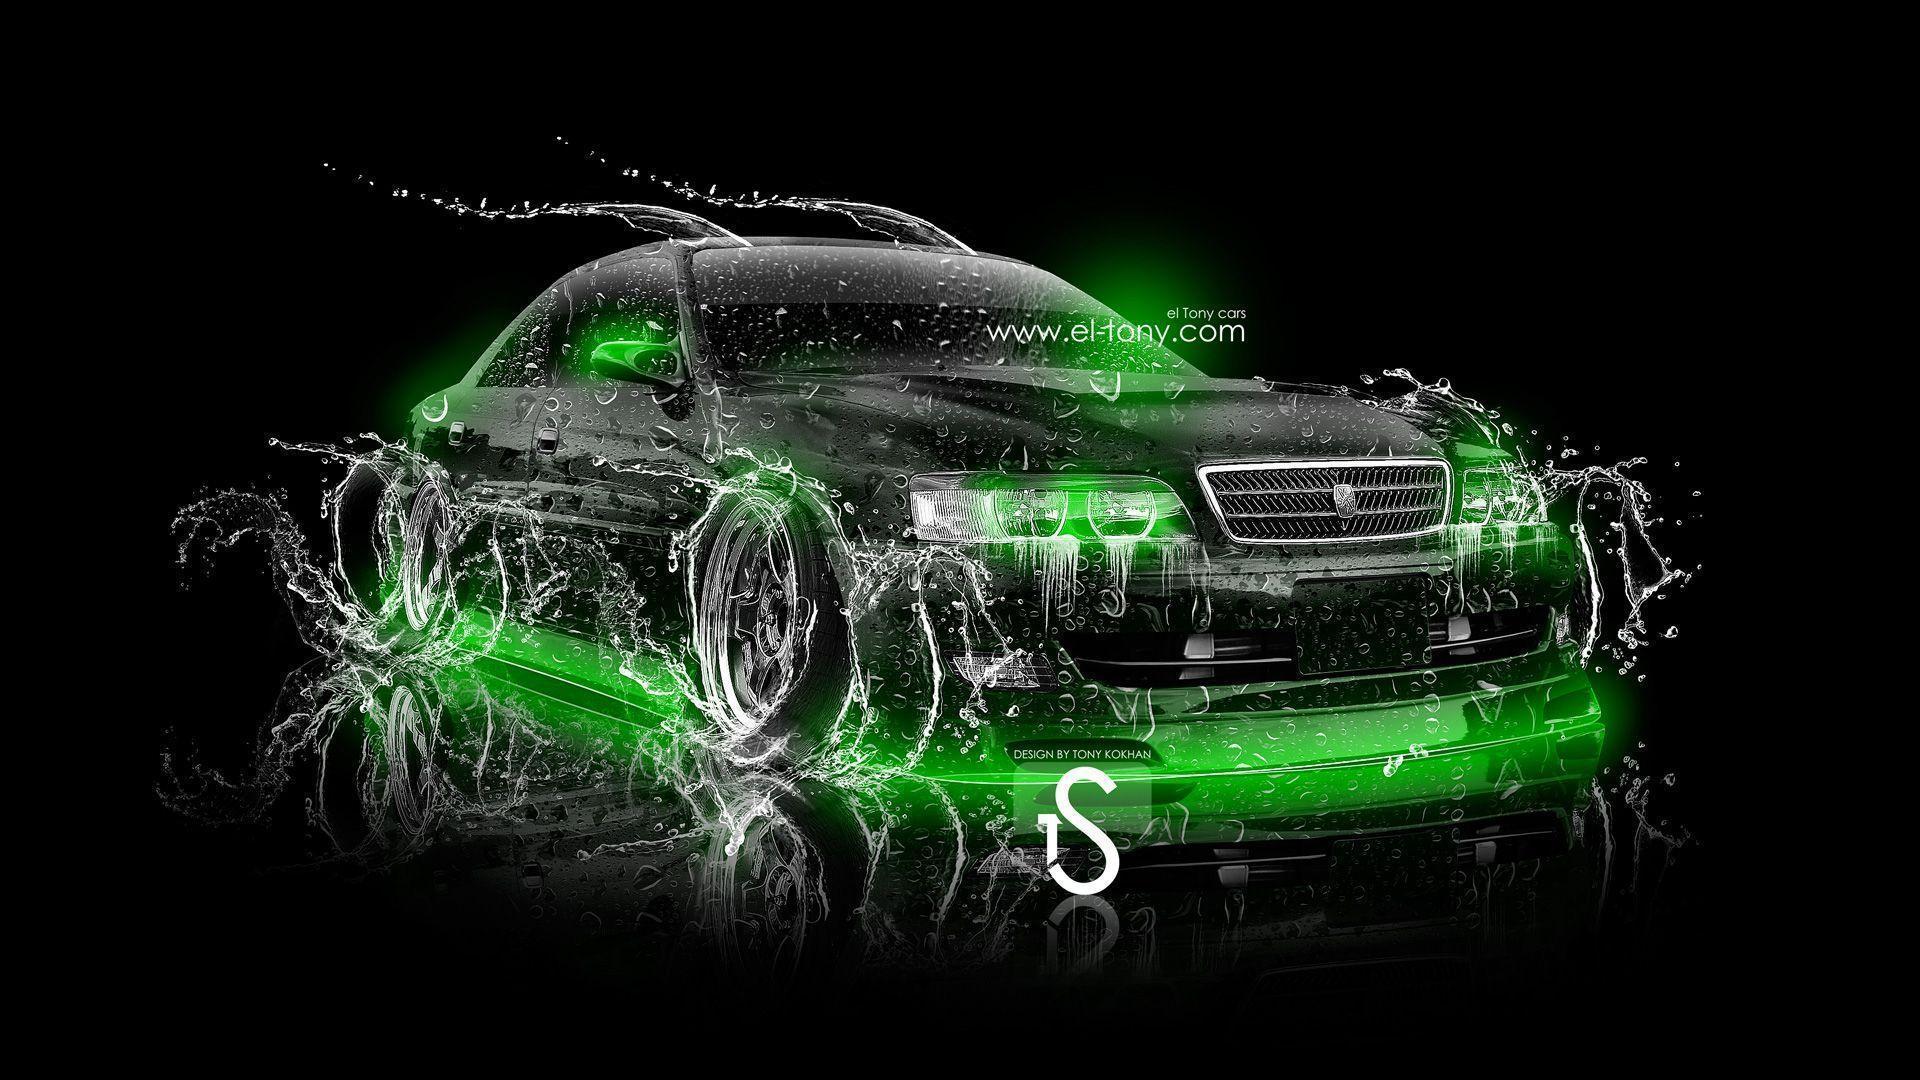 image For > Lime Green Car Wallpaper